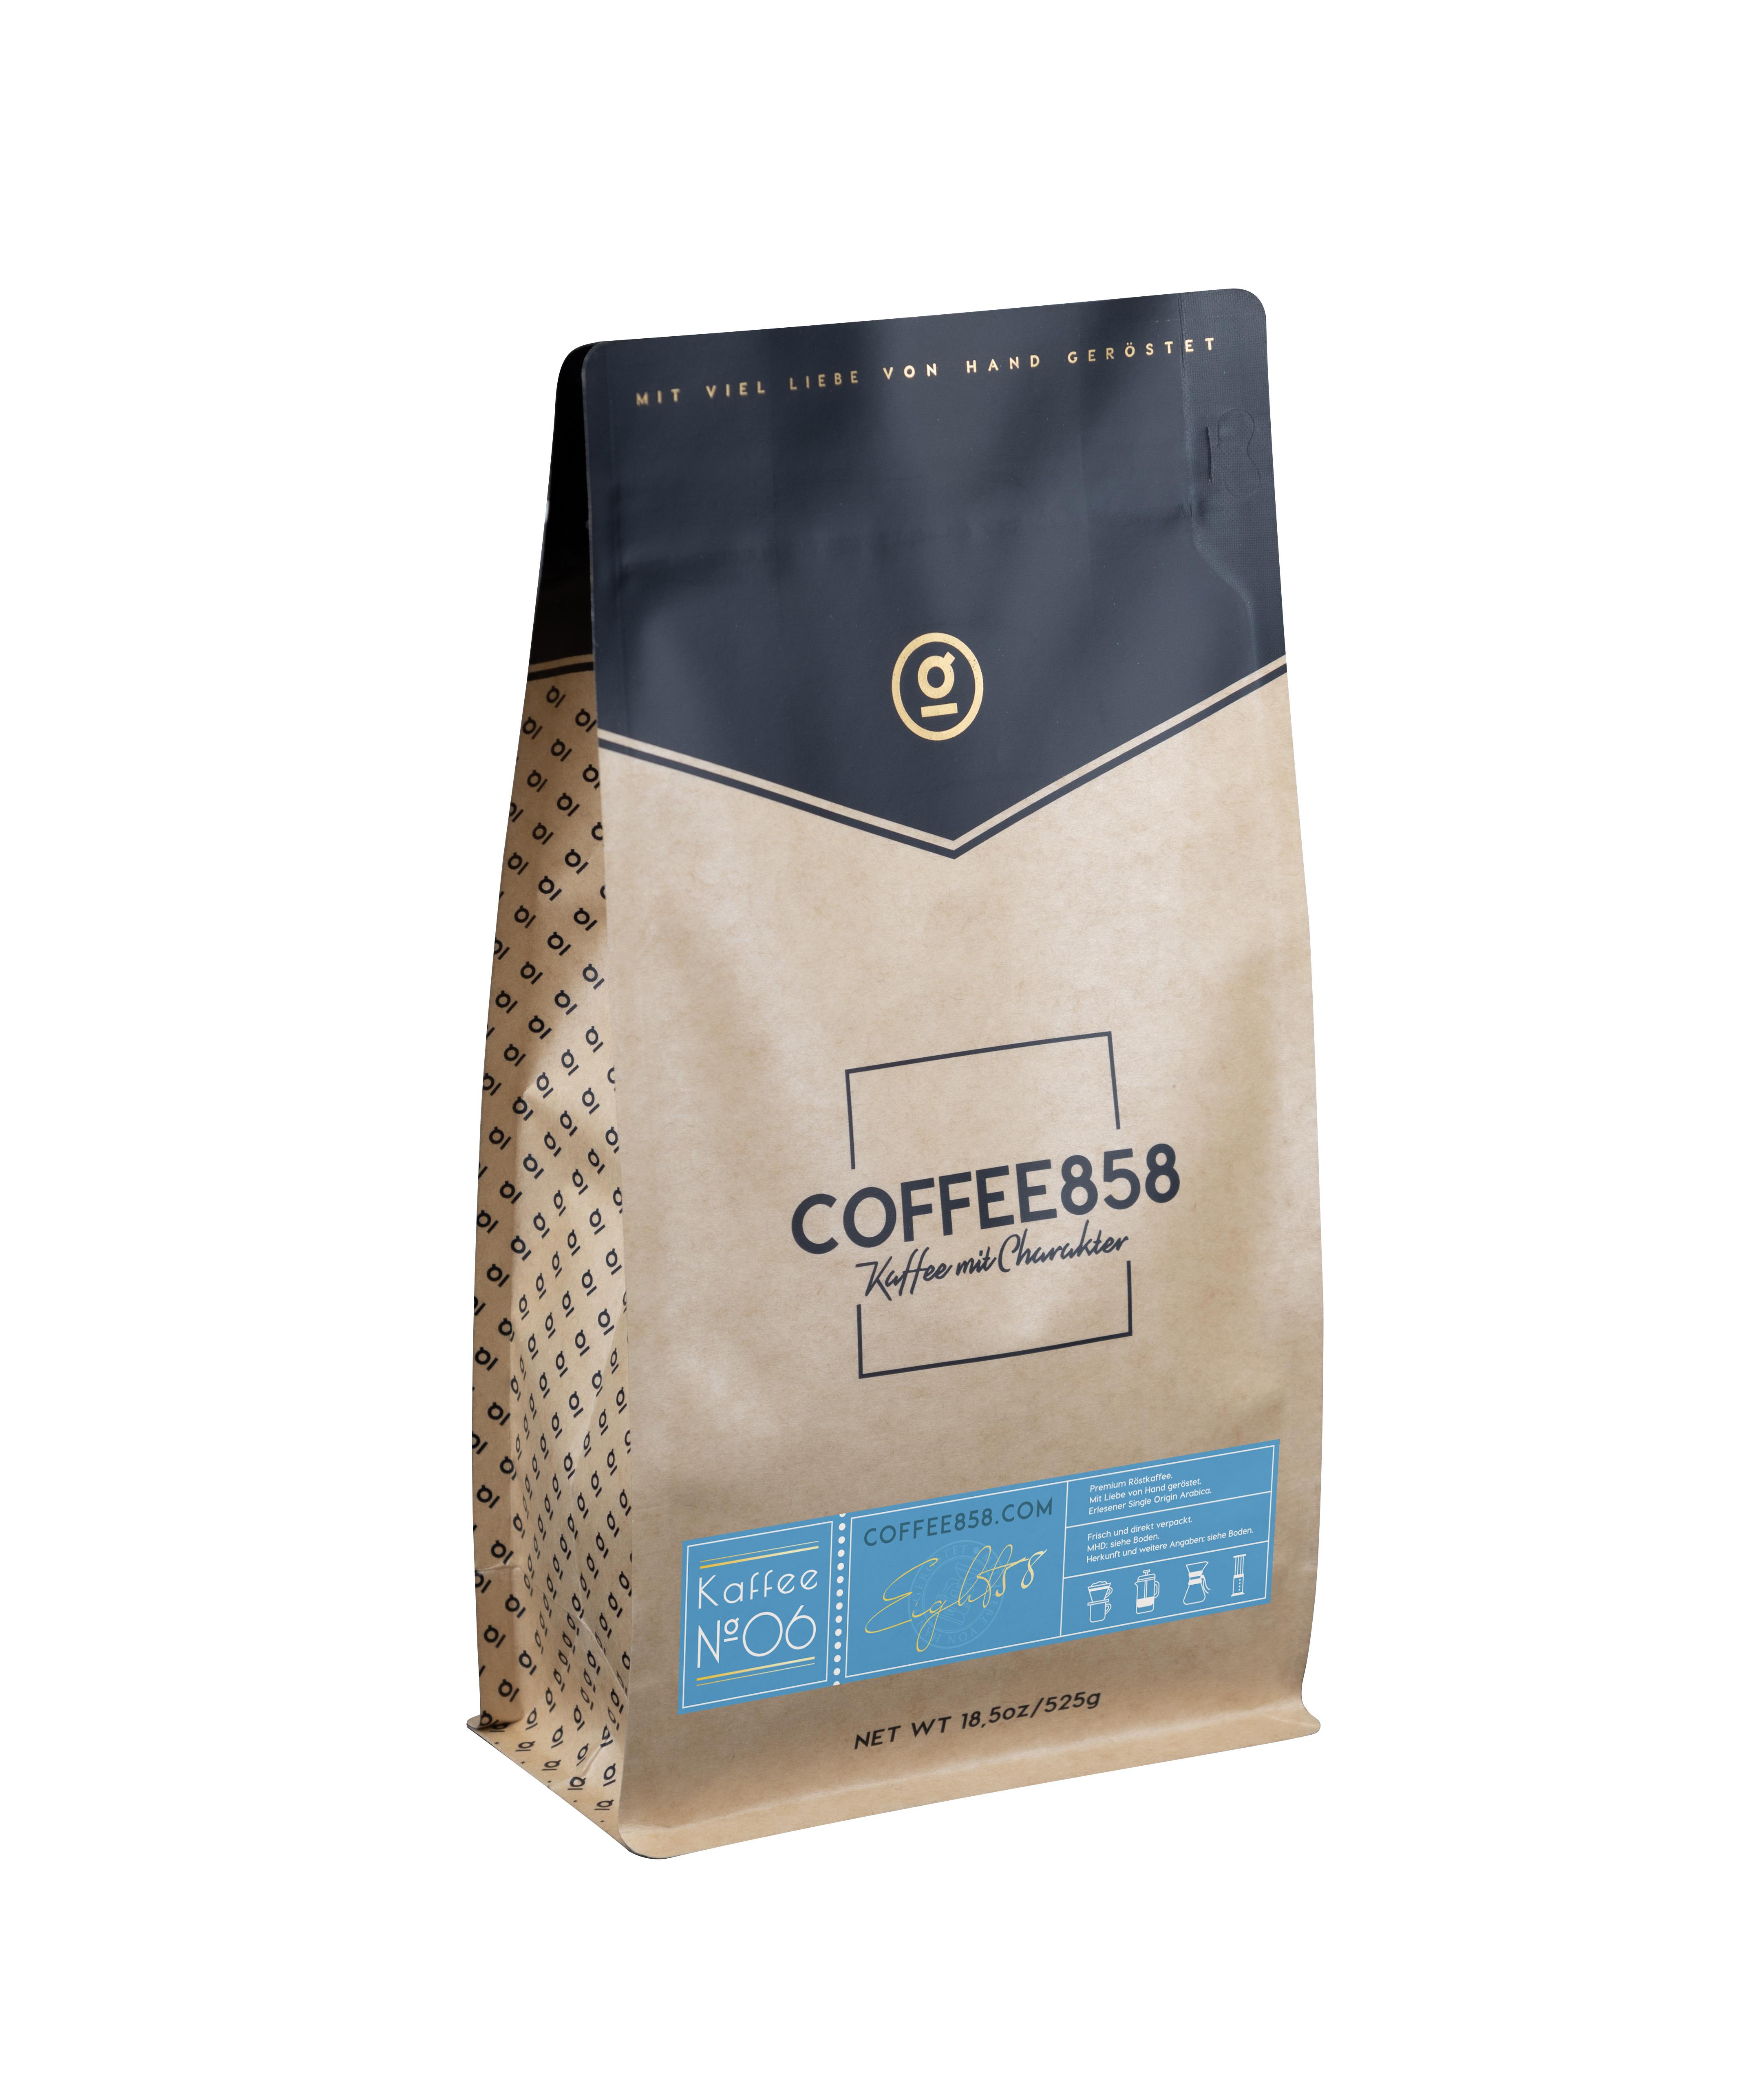 Kaffee N°06 - Single Origin Arabica aus Guatemala